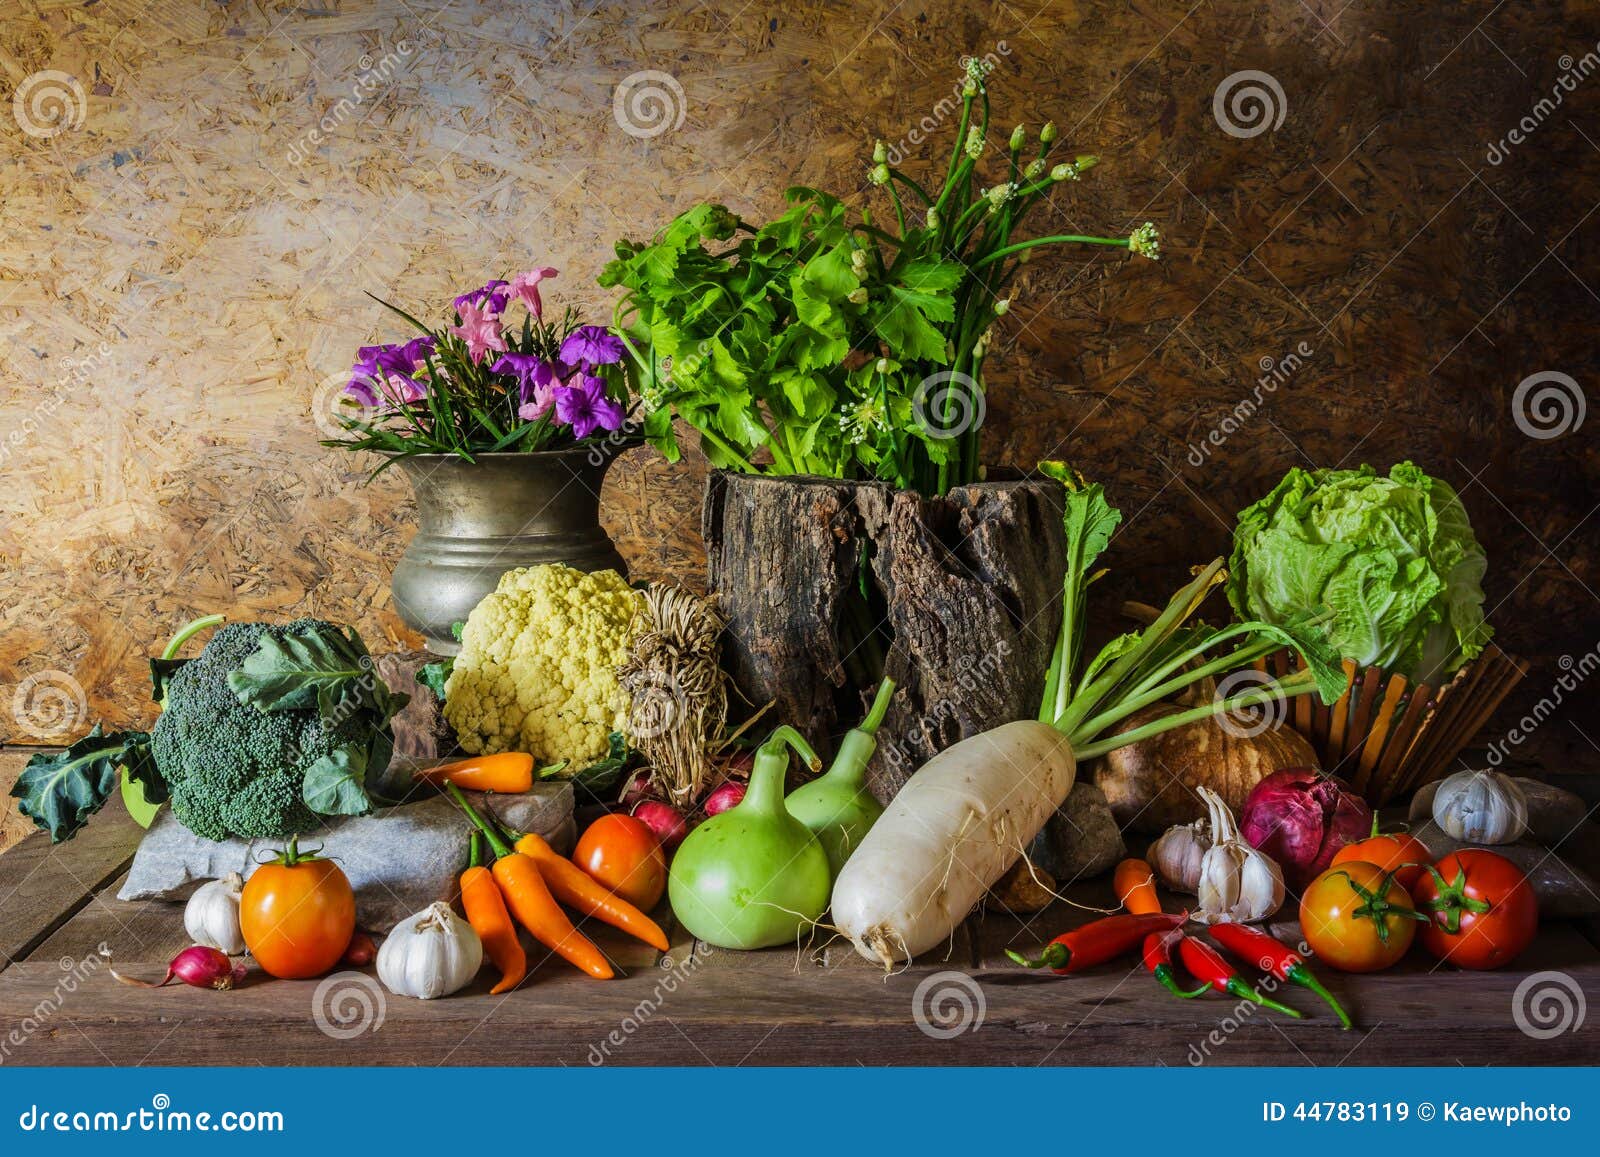 12 овощей и трав. Летние овощи. Натюрморт с овощами. Овощи и травы. Овощи летом.